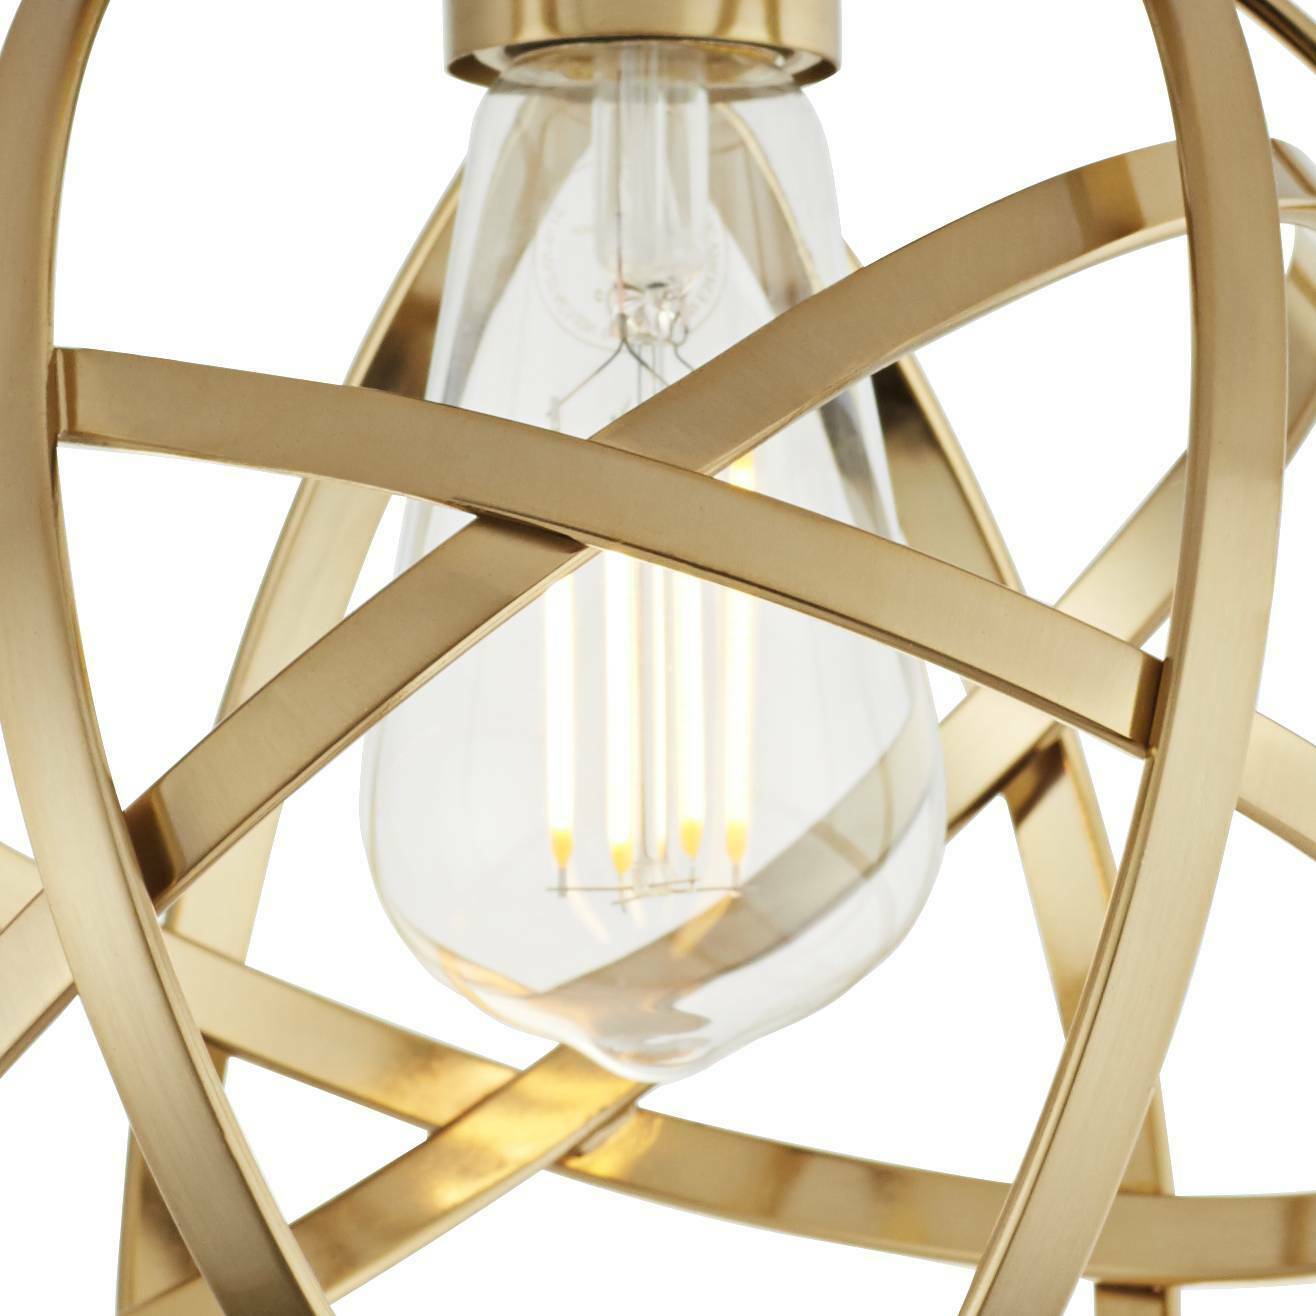 Industrial Atom 8" Wide Brass LED Ceiling Light